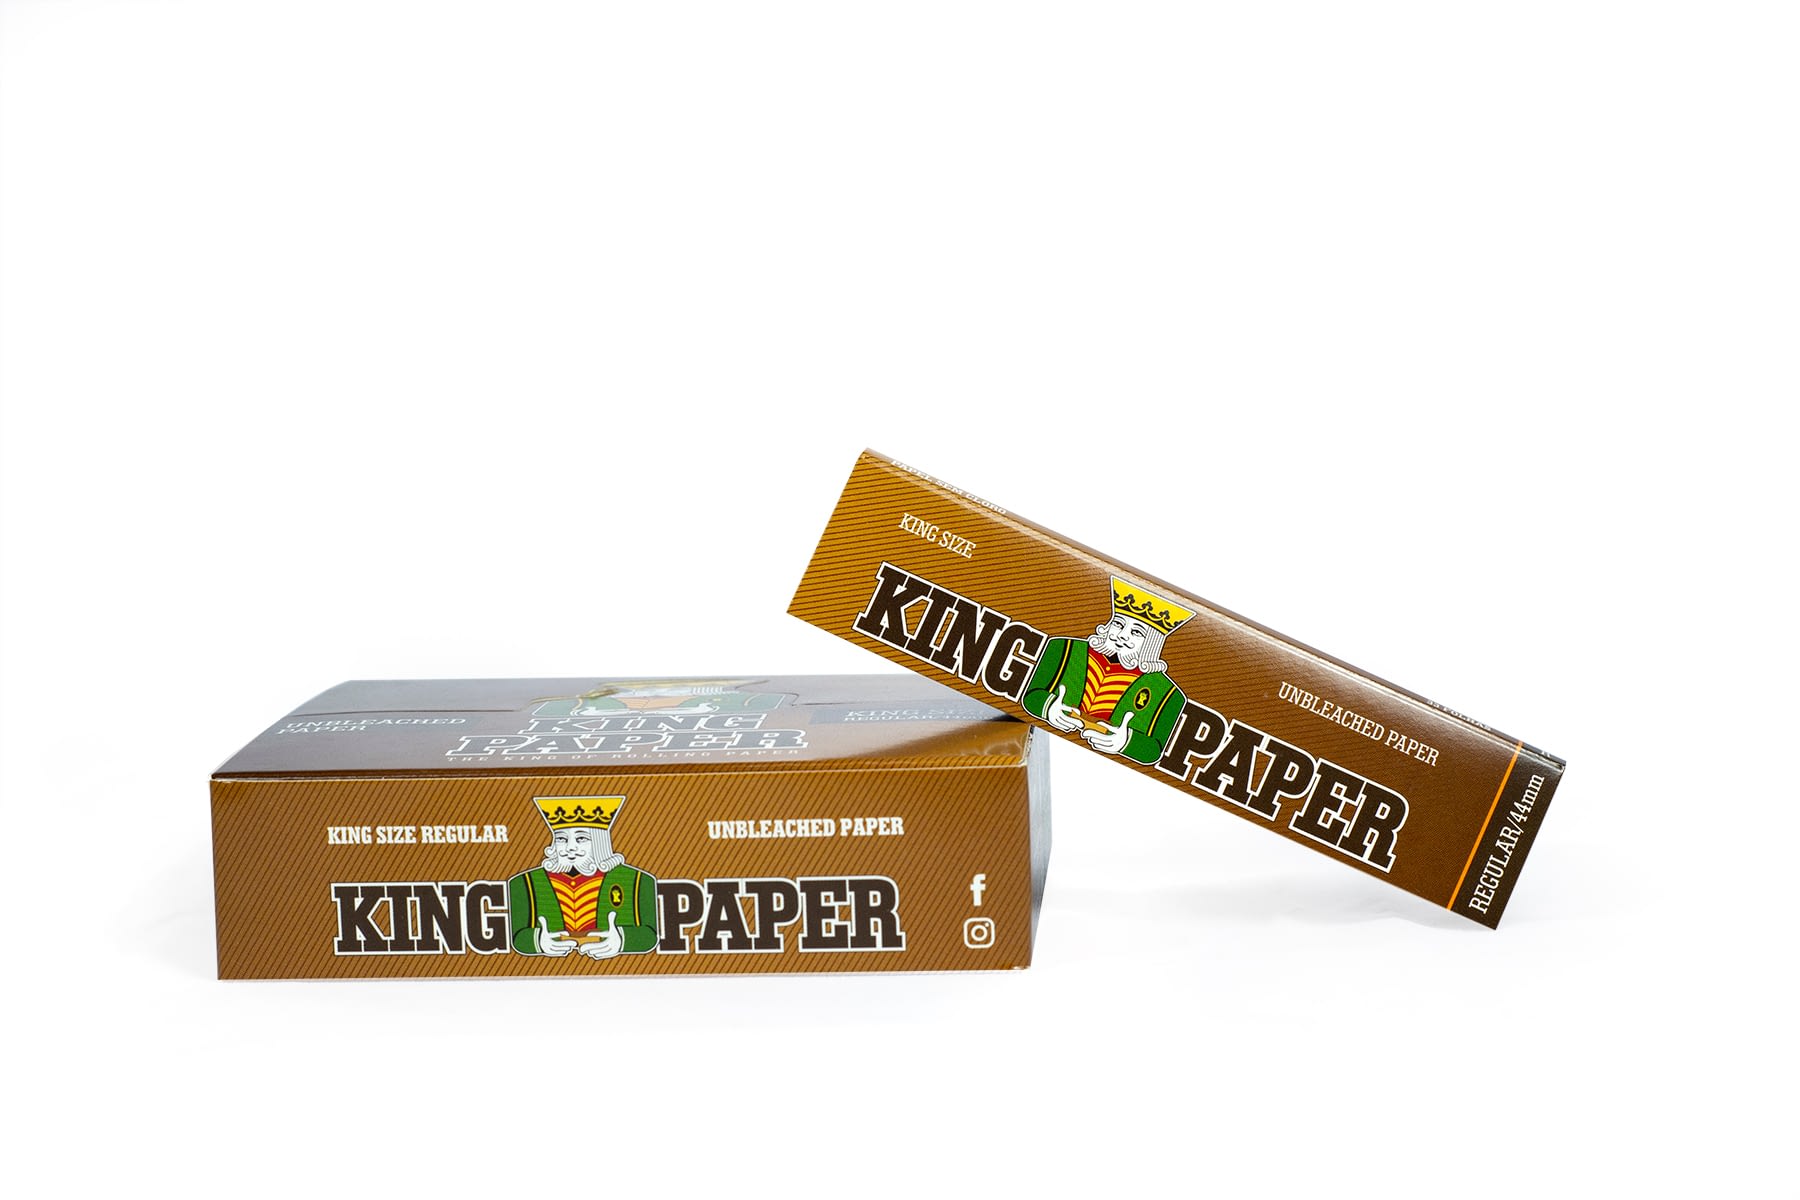 King Paper - Tabacaria Floripa